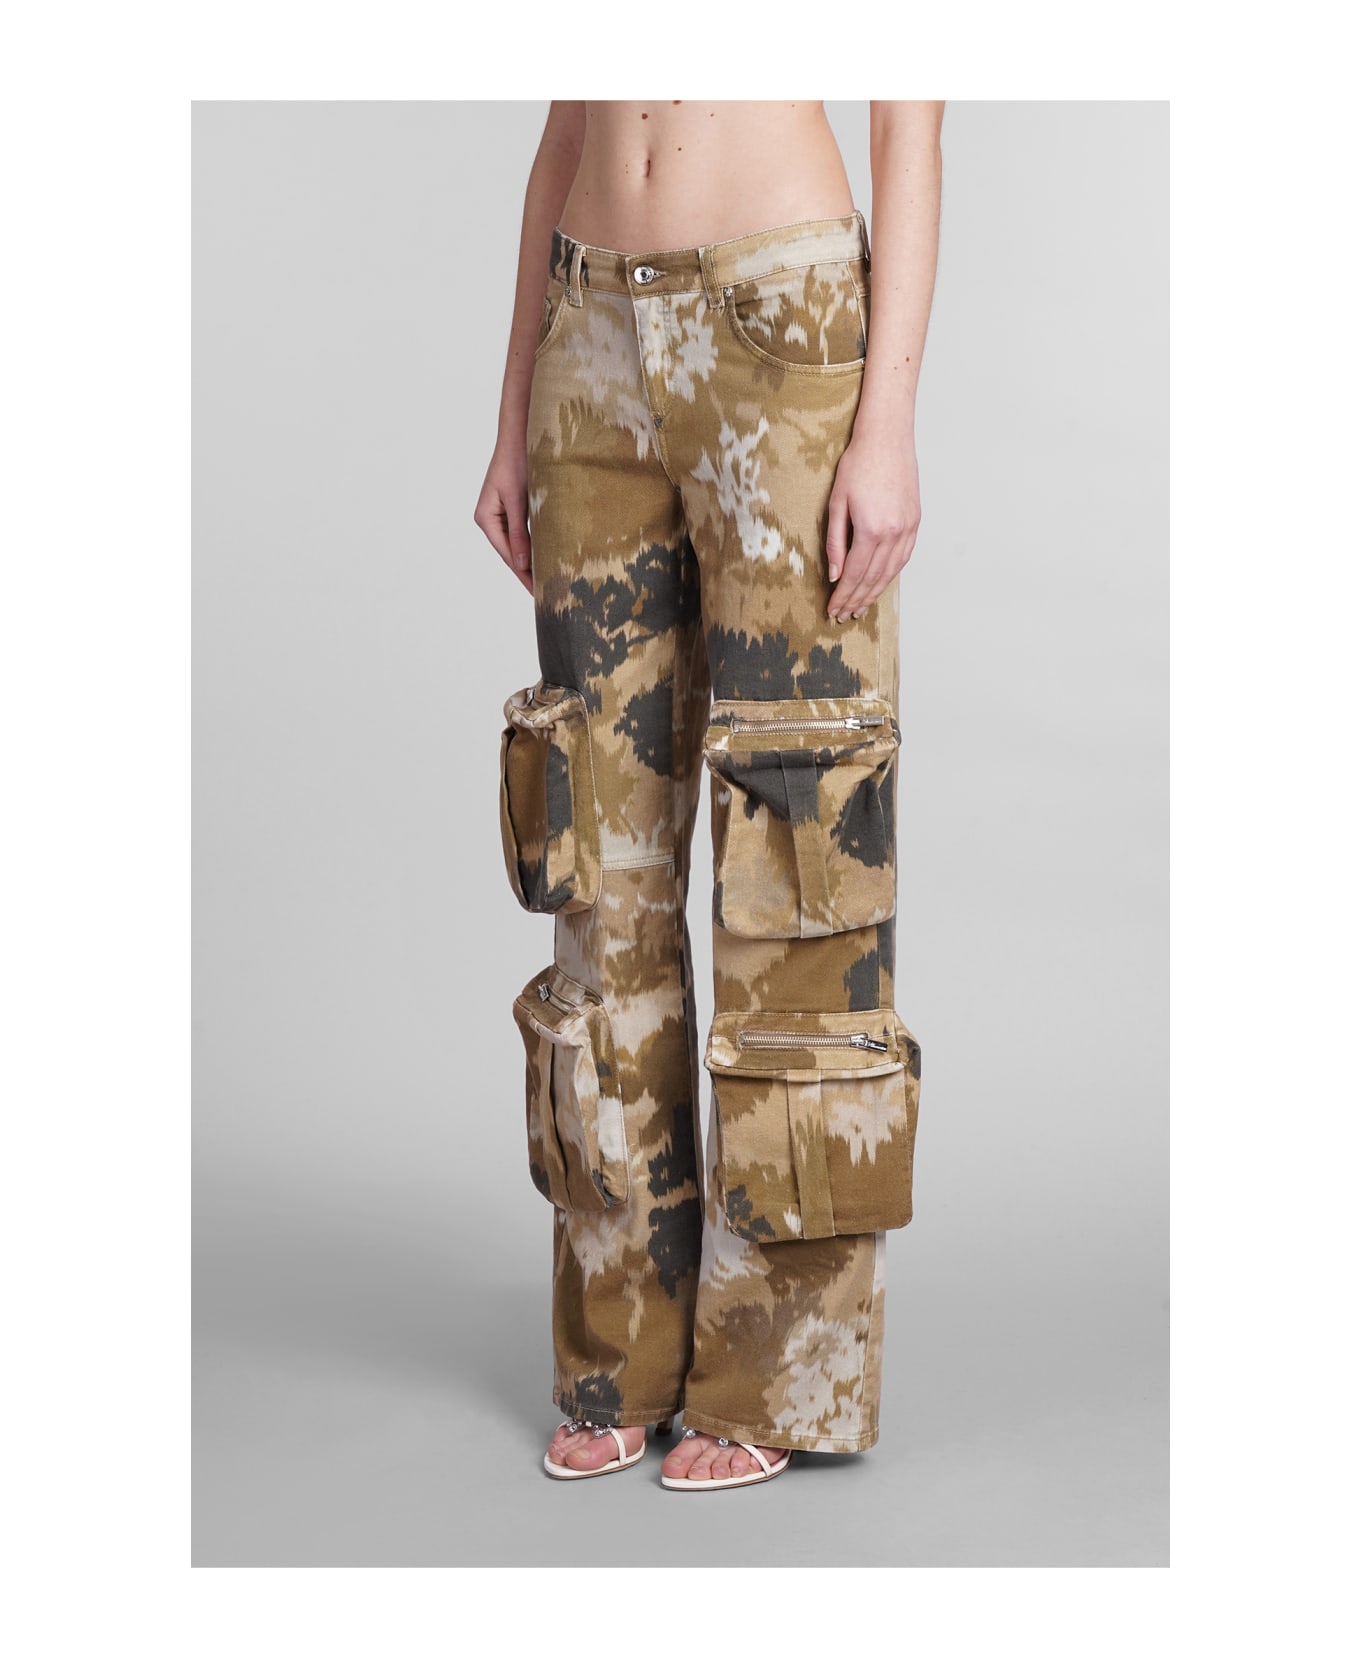 Blumarine Pants In Camouflage Cotton - BROWN